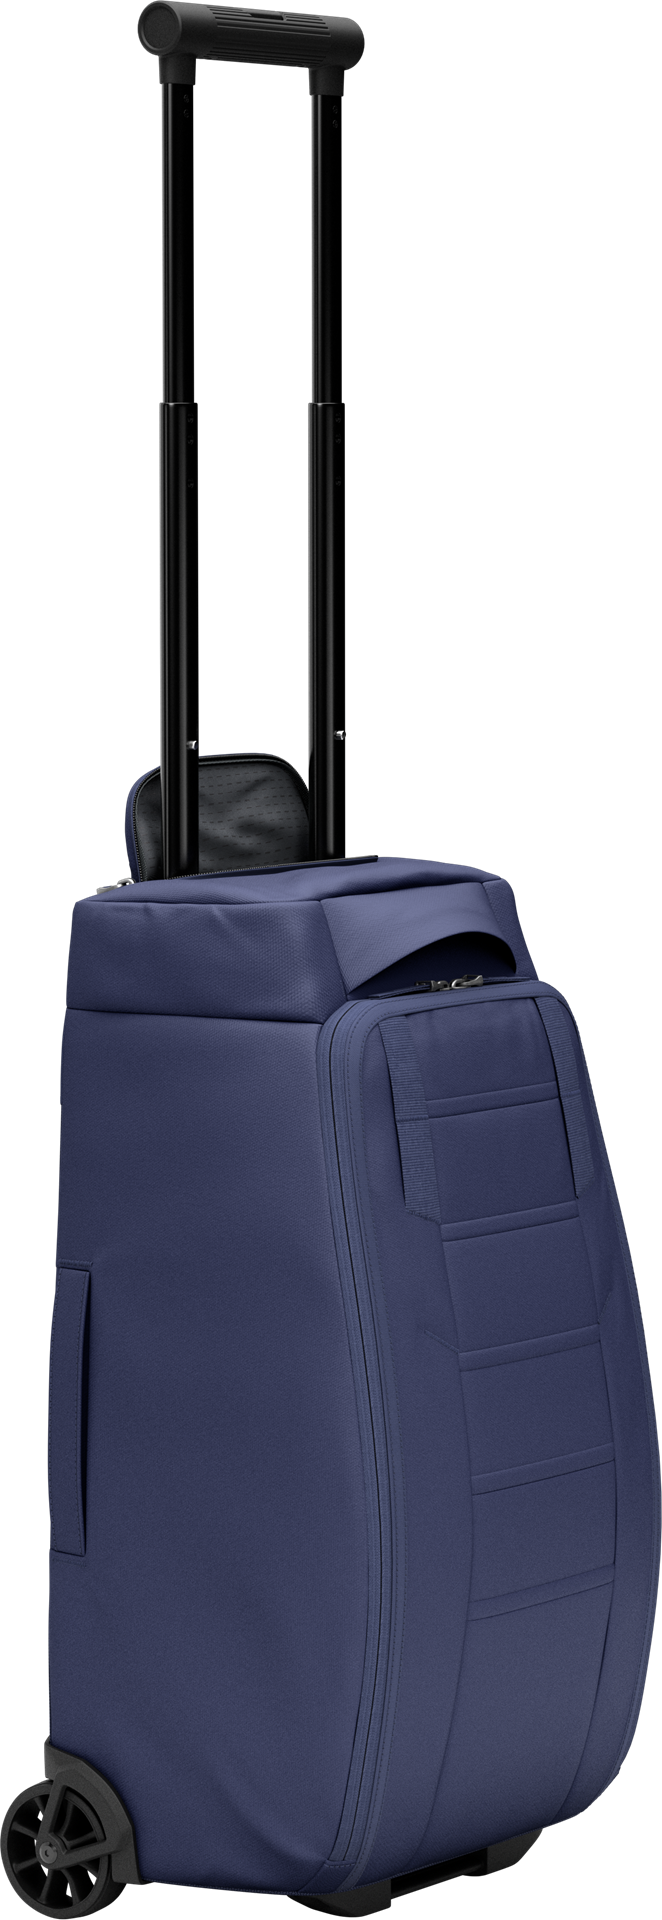 Db Journey Hugger Roller Bag - 40L - Blue Hour Handbagage Koffer - Reisartikelen-nl